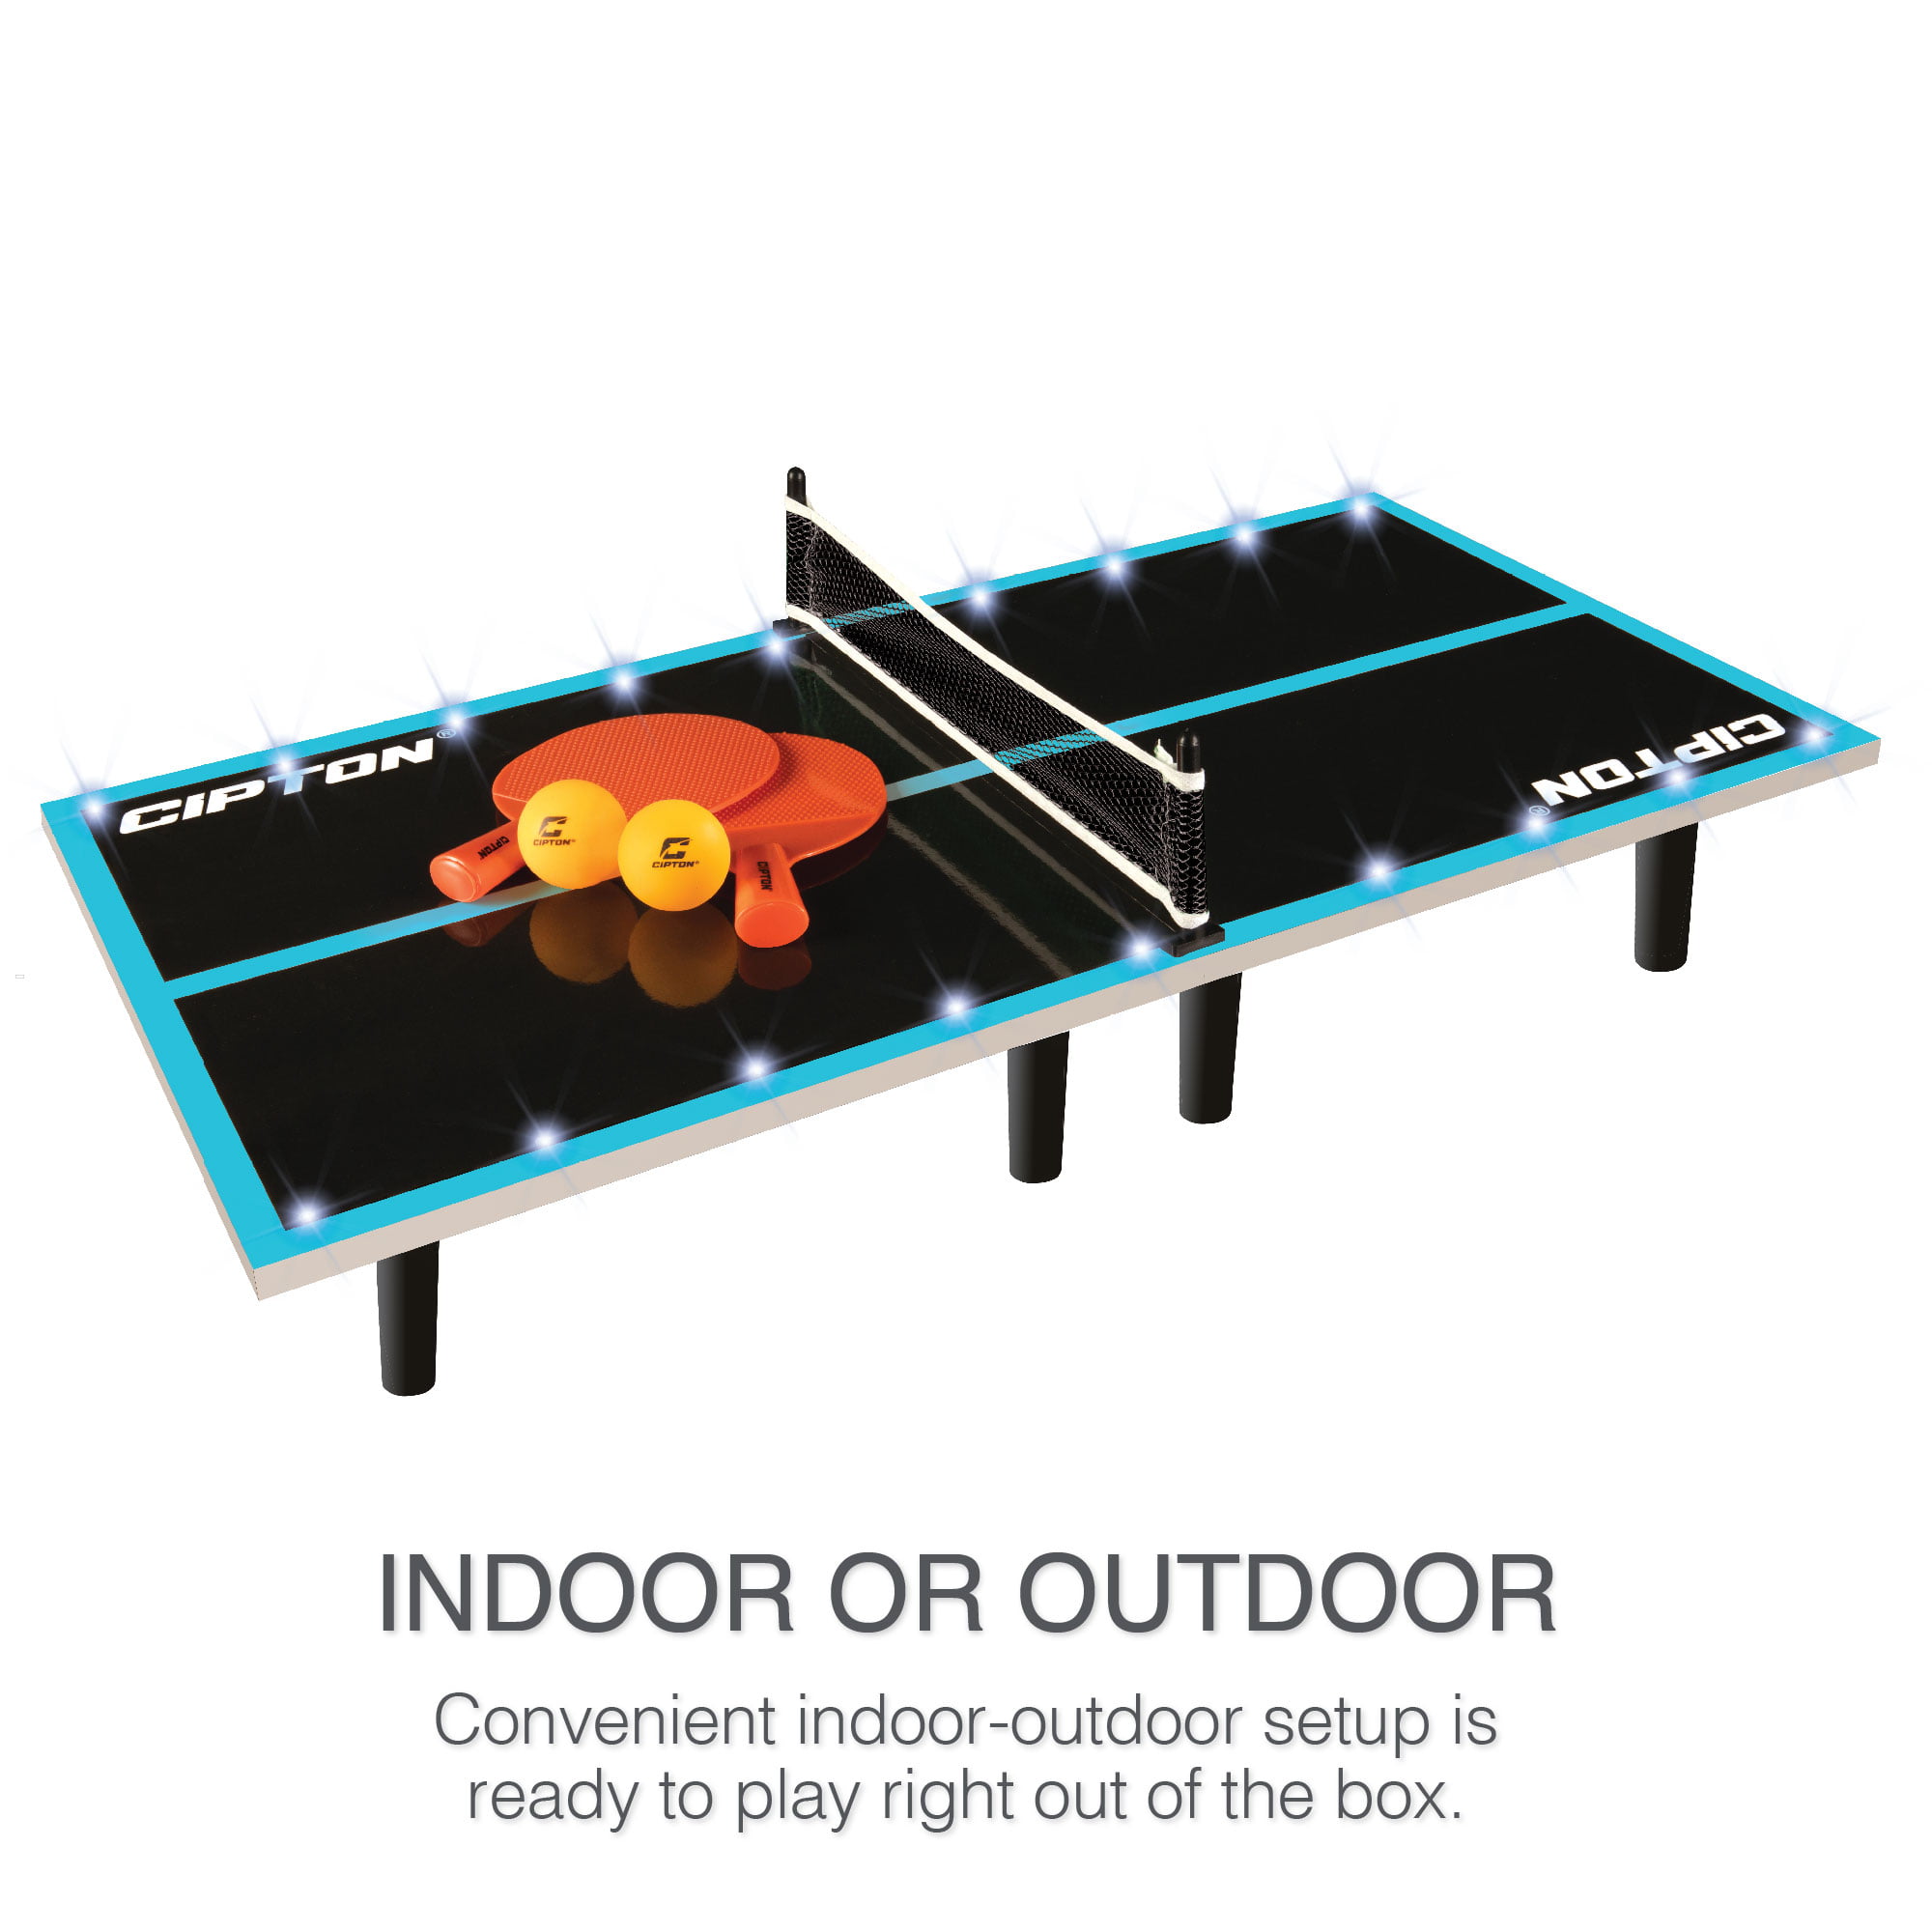 Out of the Blue Tischtennisnetz Mini Ping Pong Spiel-Set mit